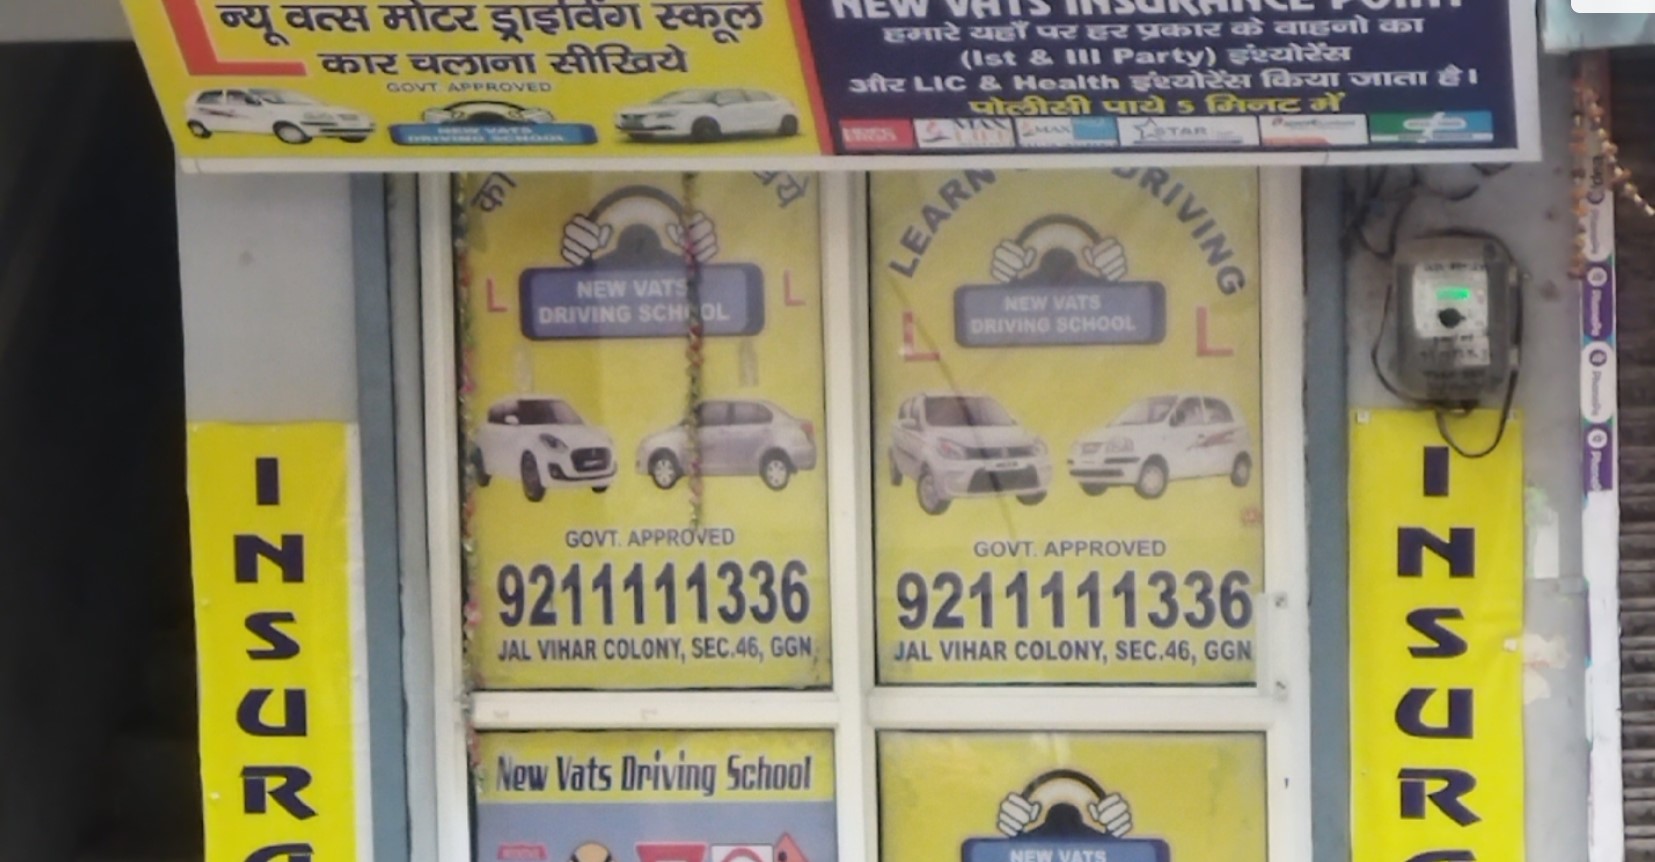 New Vats Motor Driving School in Jal Vihar Colony